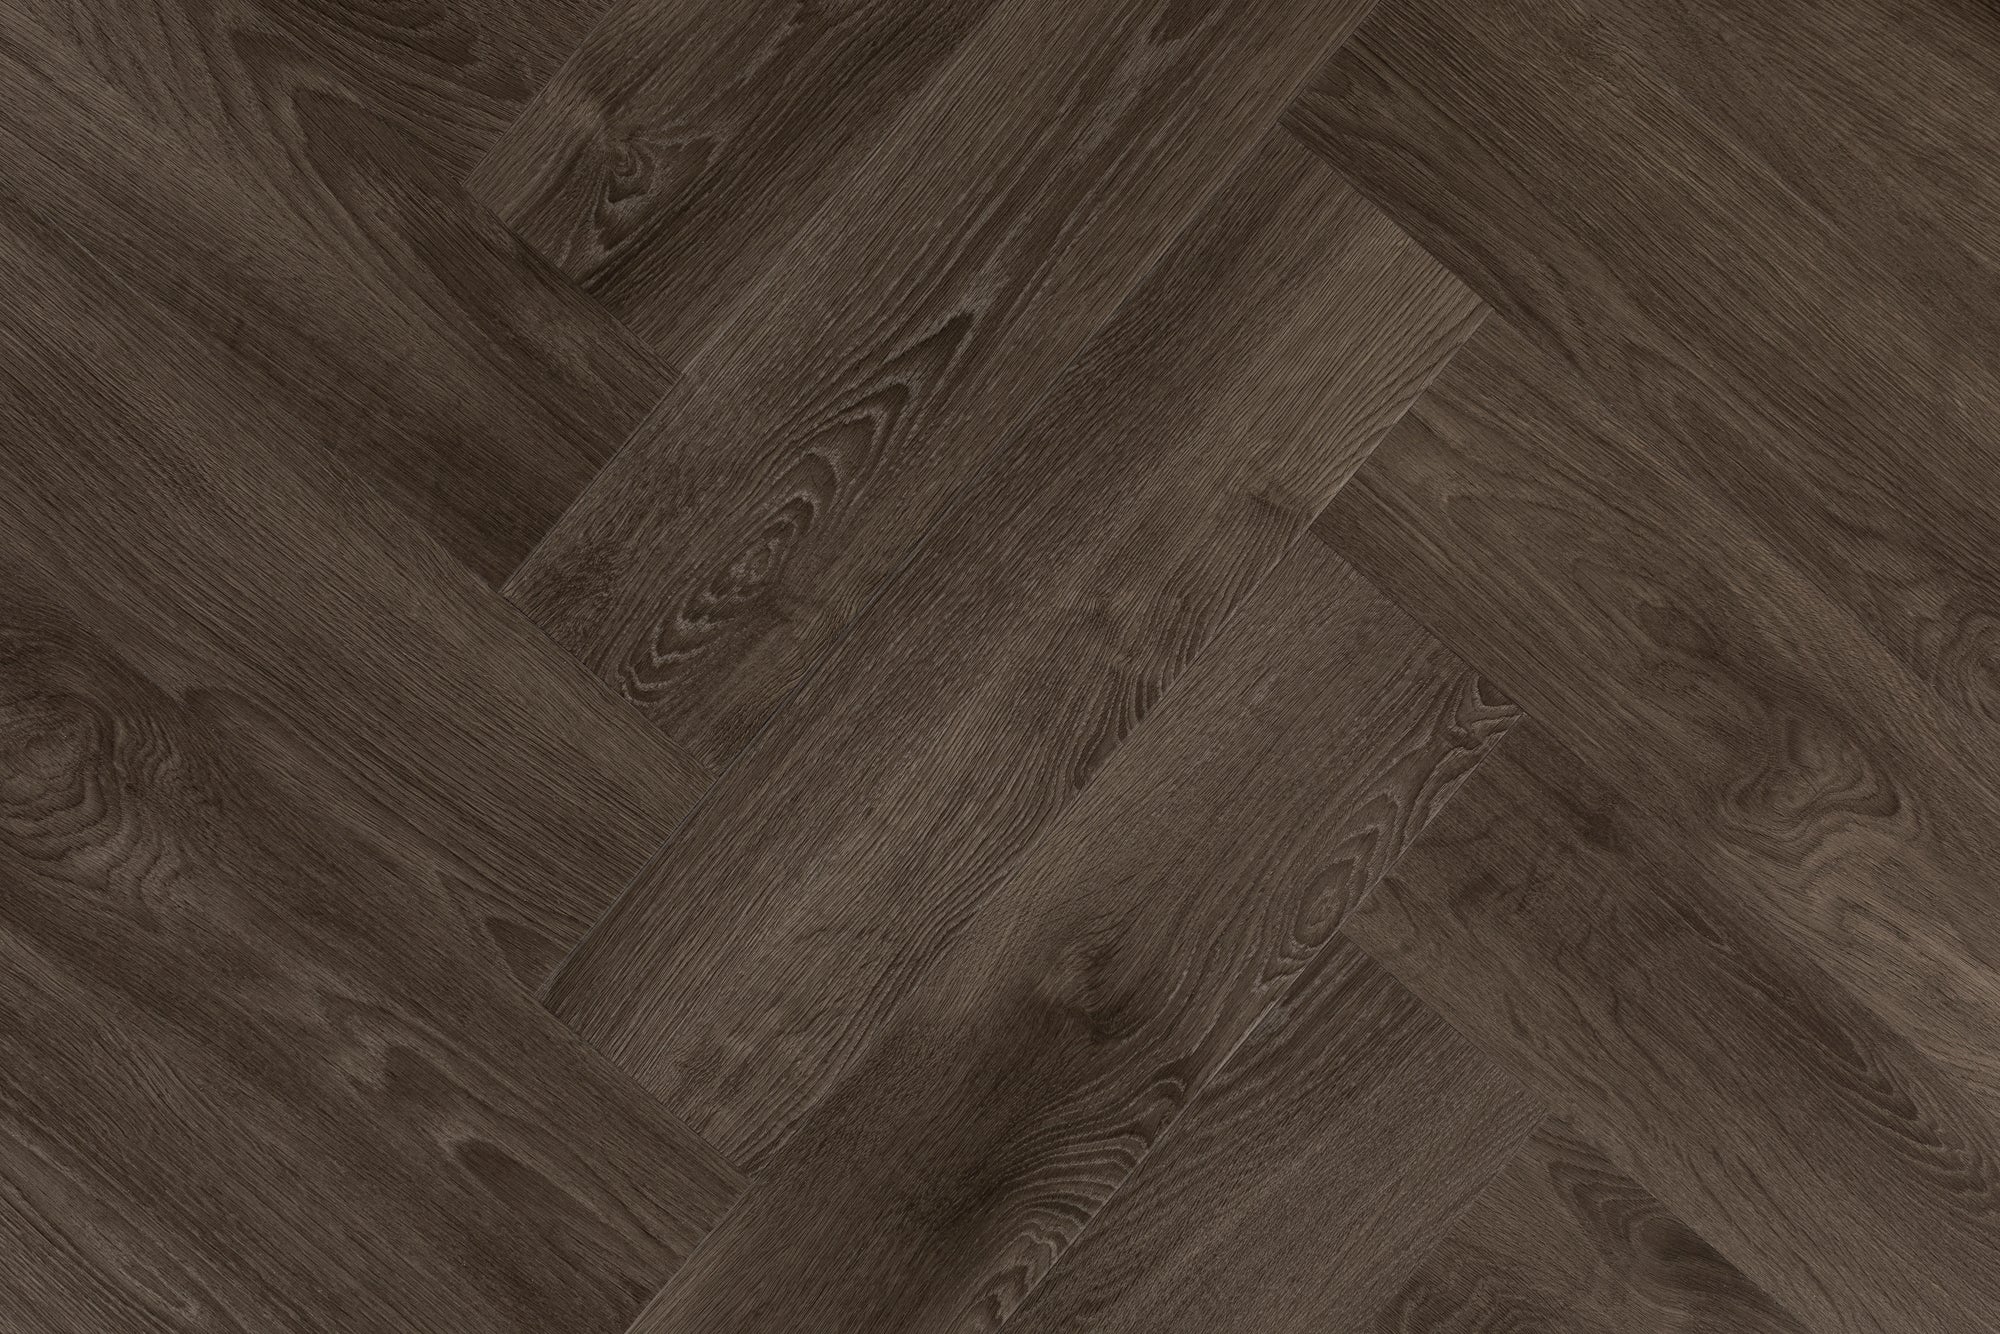 Blanched Carbon Glue Down Herringbone Dark Luxury Vinyl Plank Flooring from our Herringbone collection